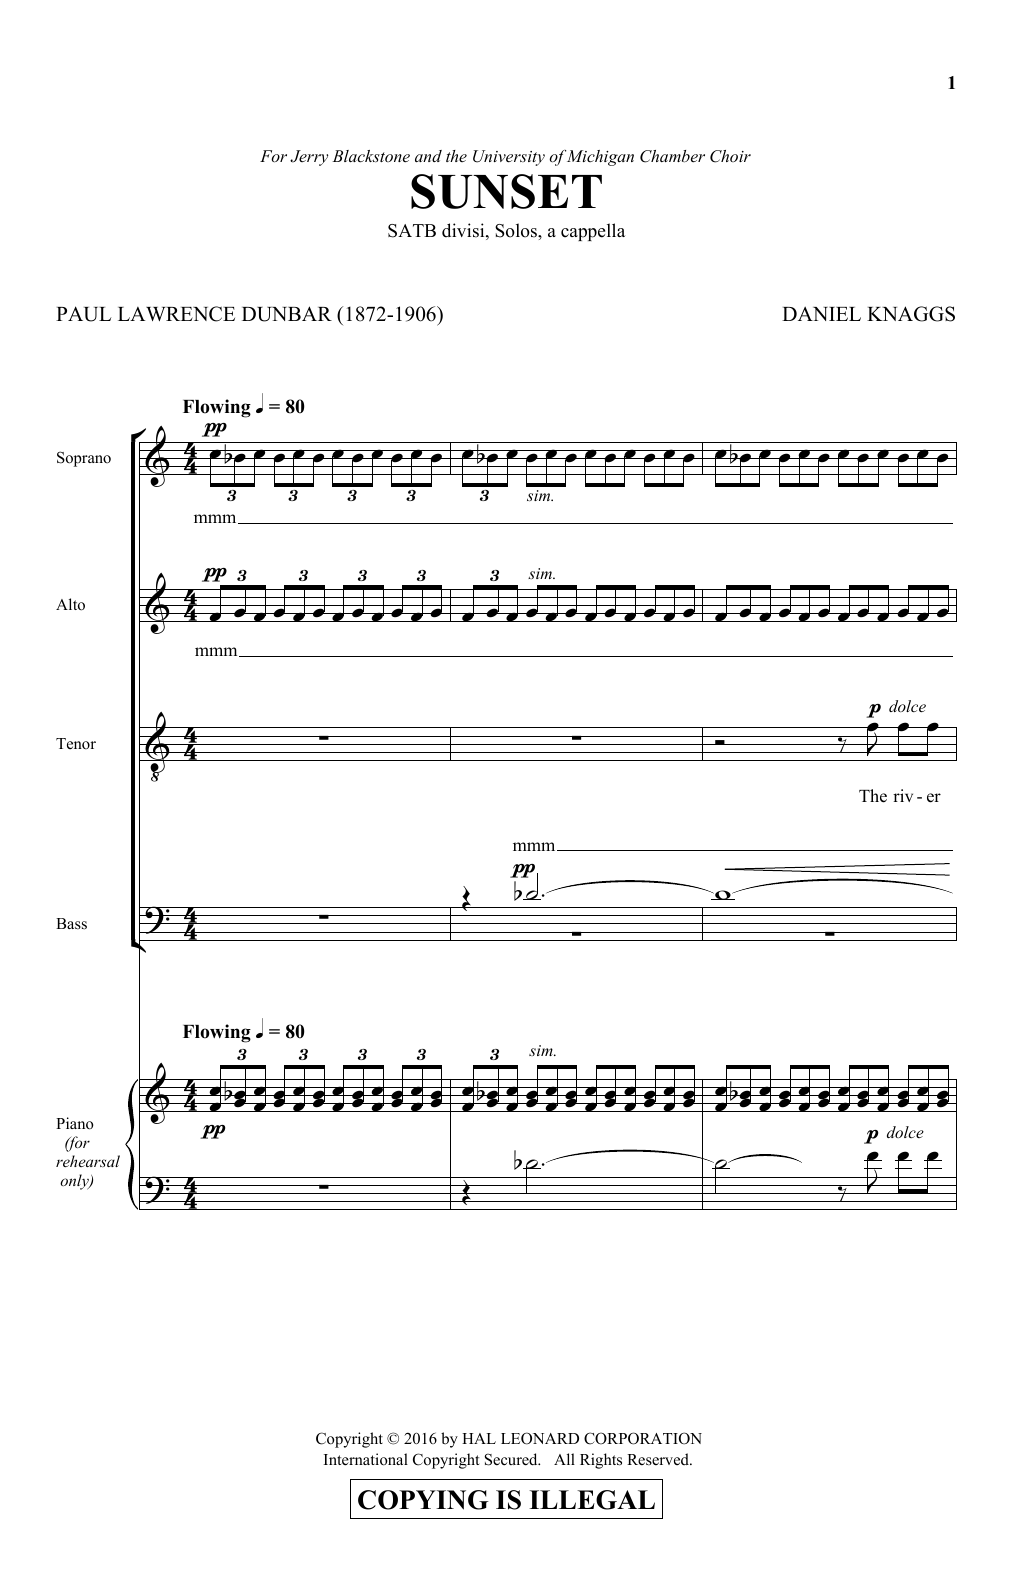 Daniel Knaggs Sunset sheet music notes and chords arranged for SATB Choir